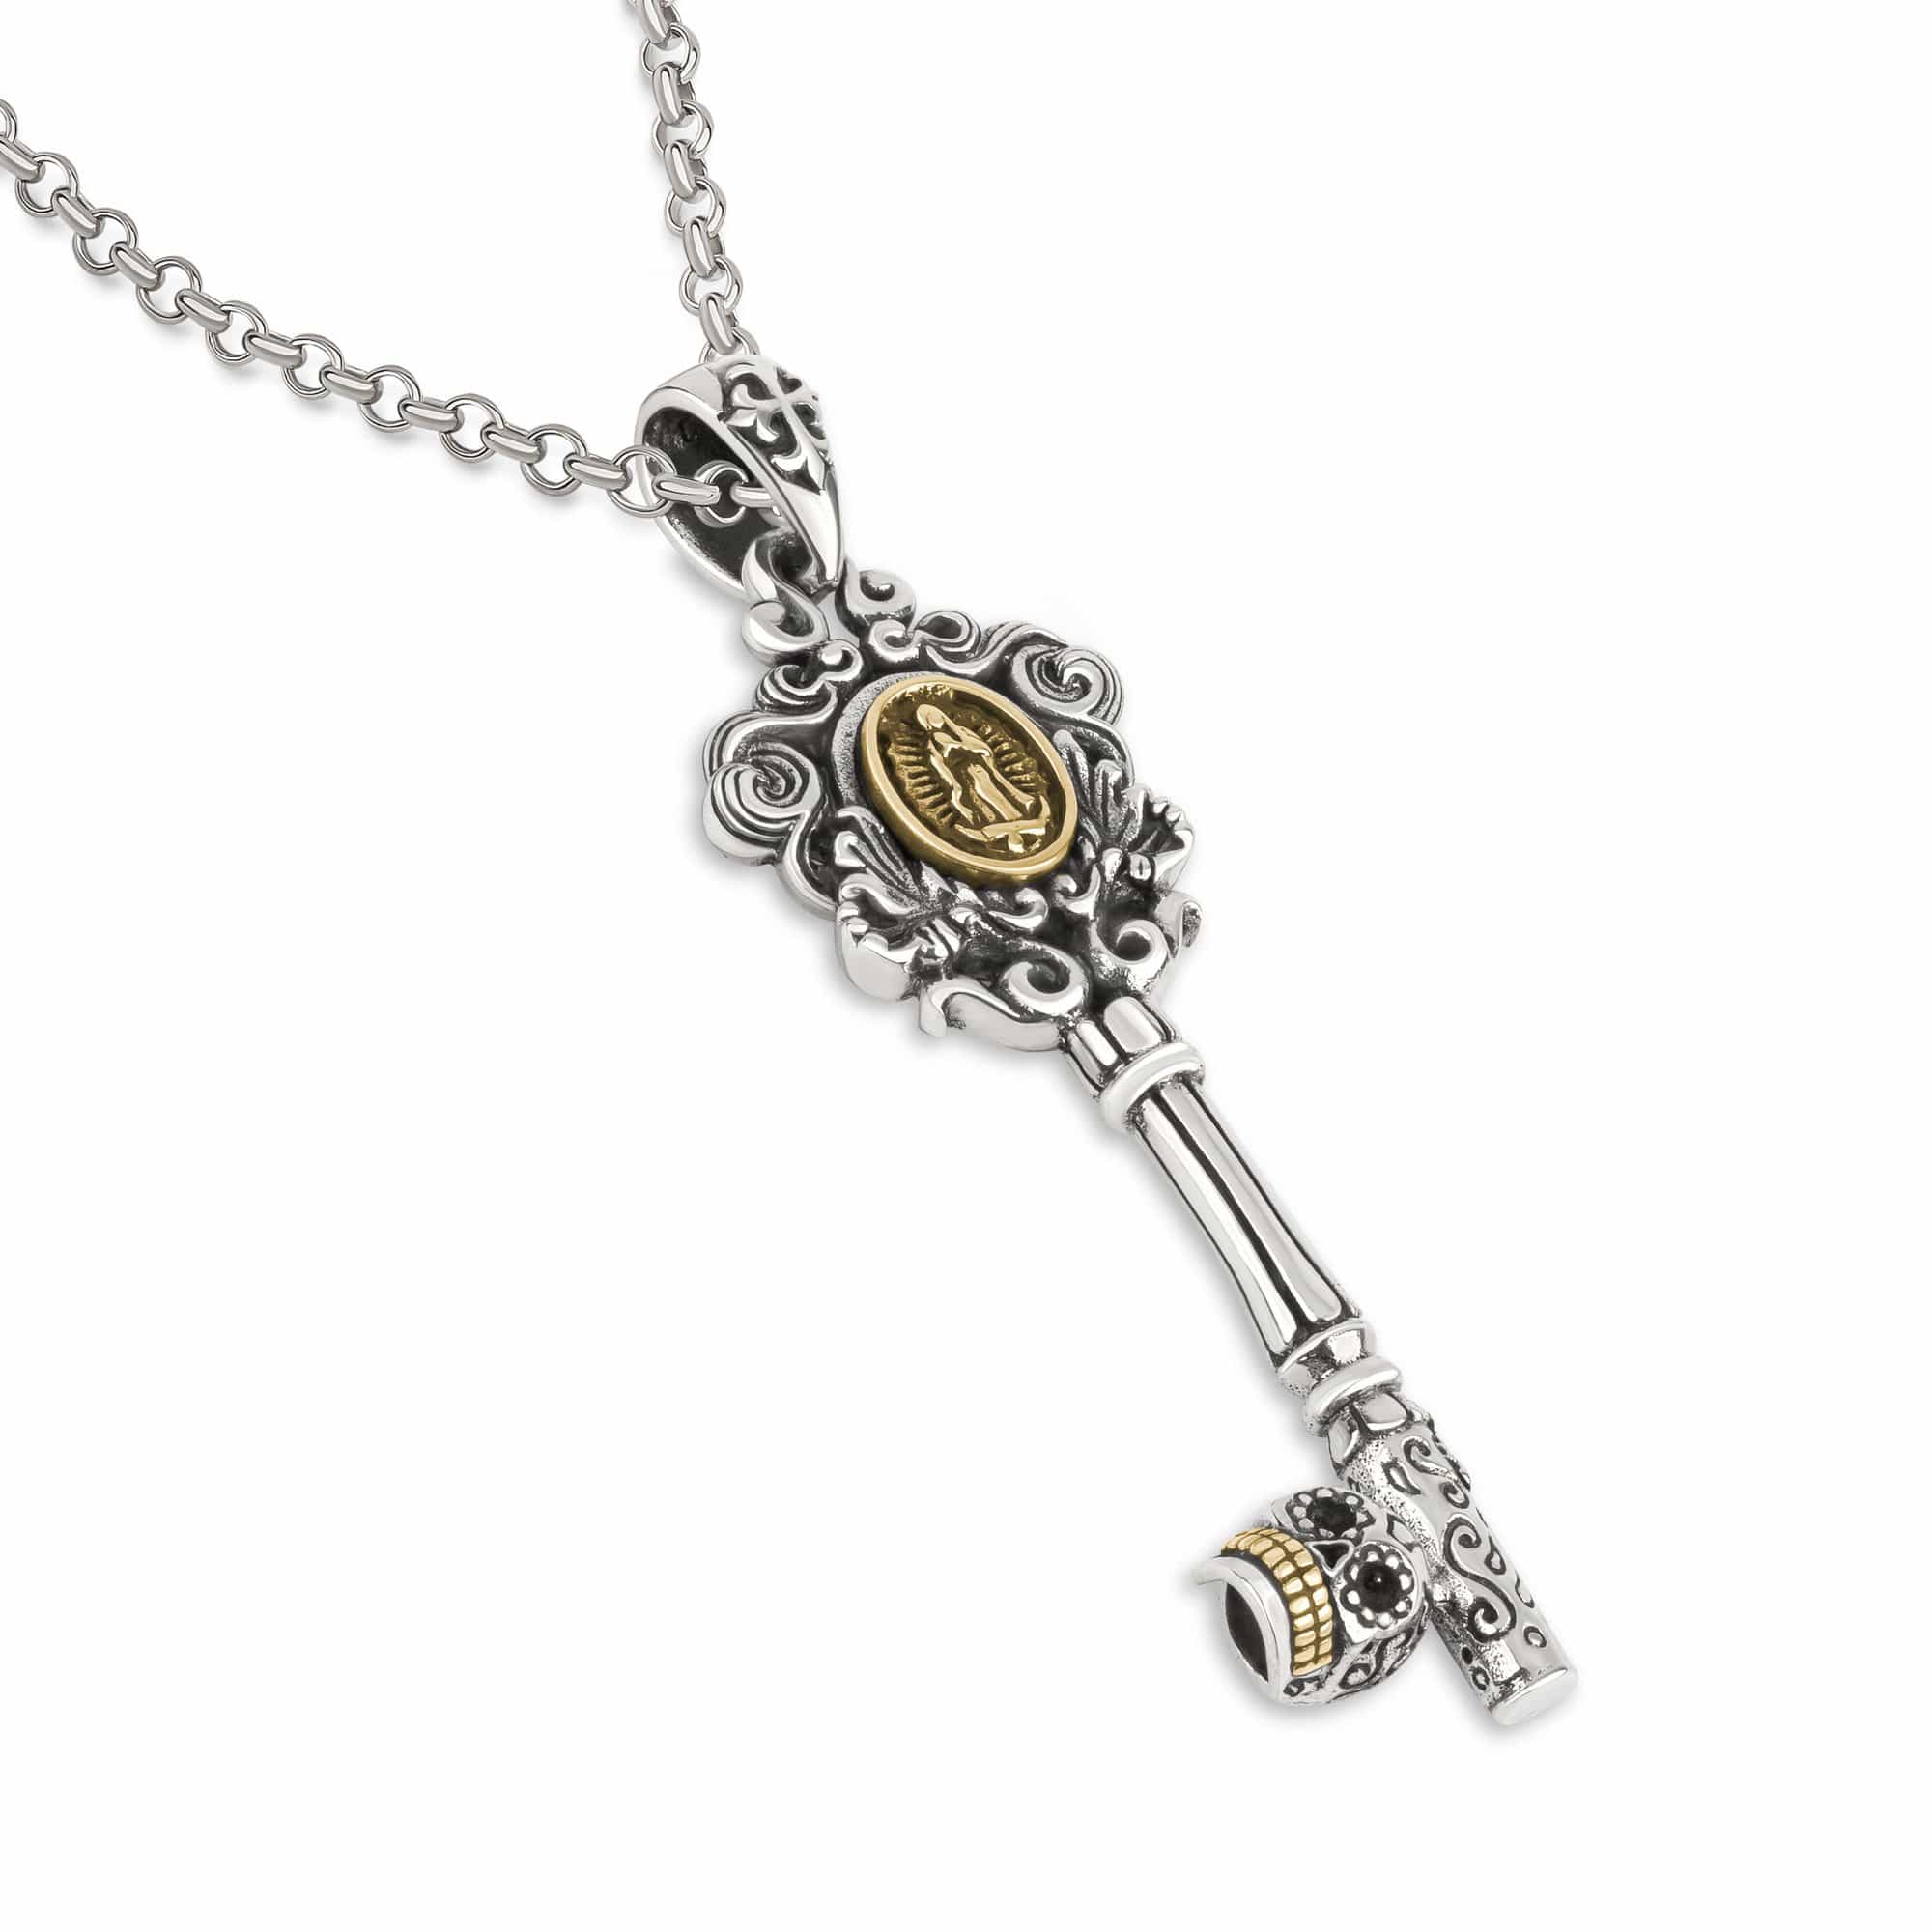 silver key necklace